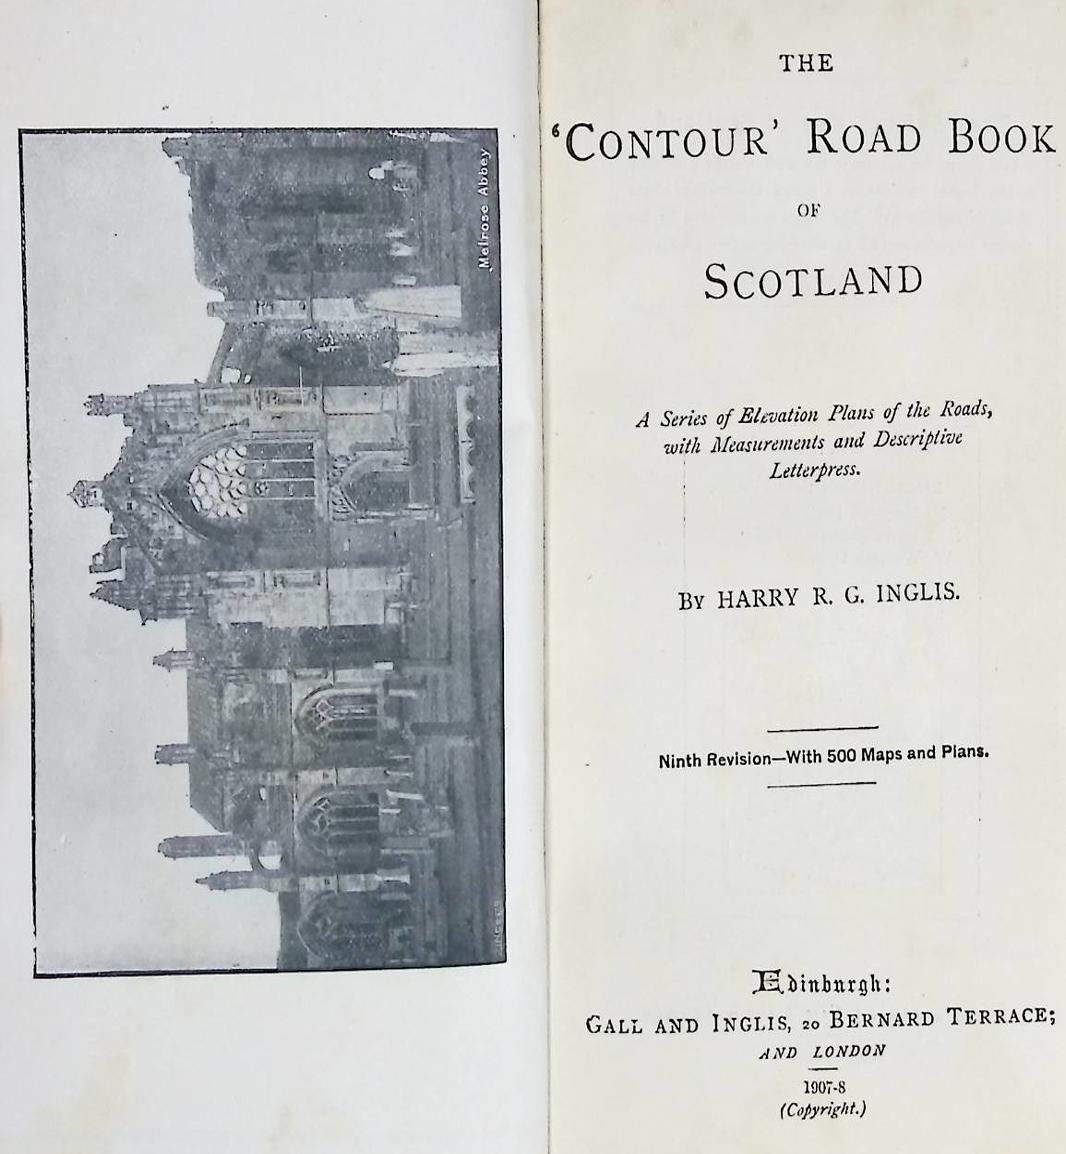 The 'Contour' Road Book of Scotland. 1907.